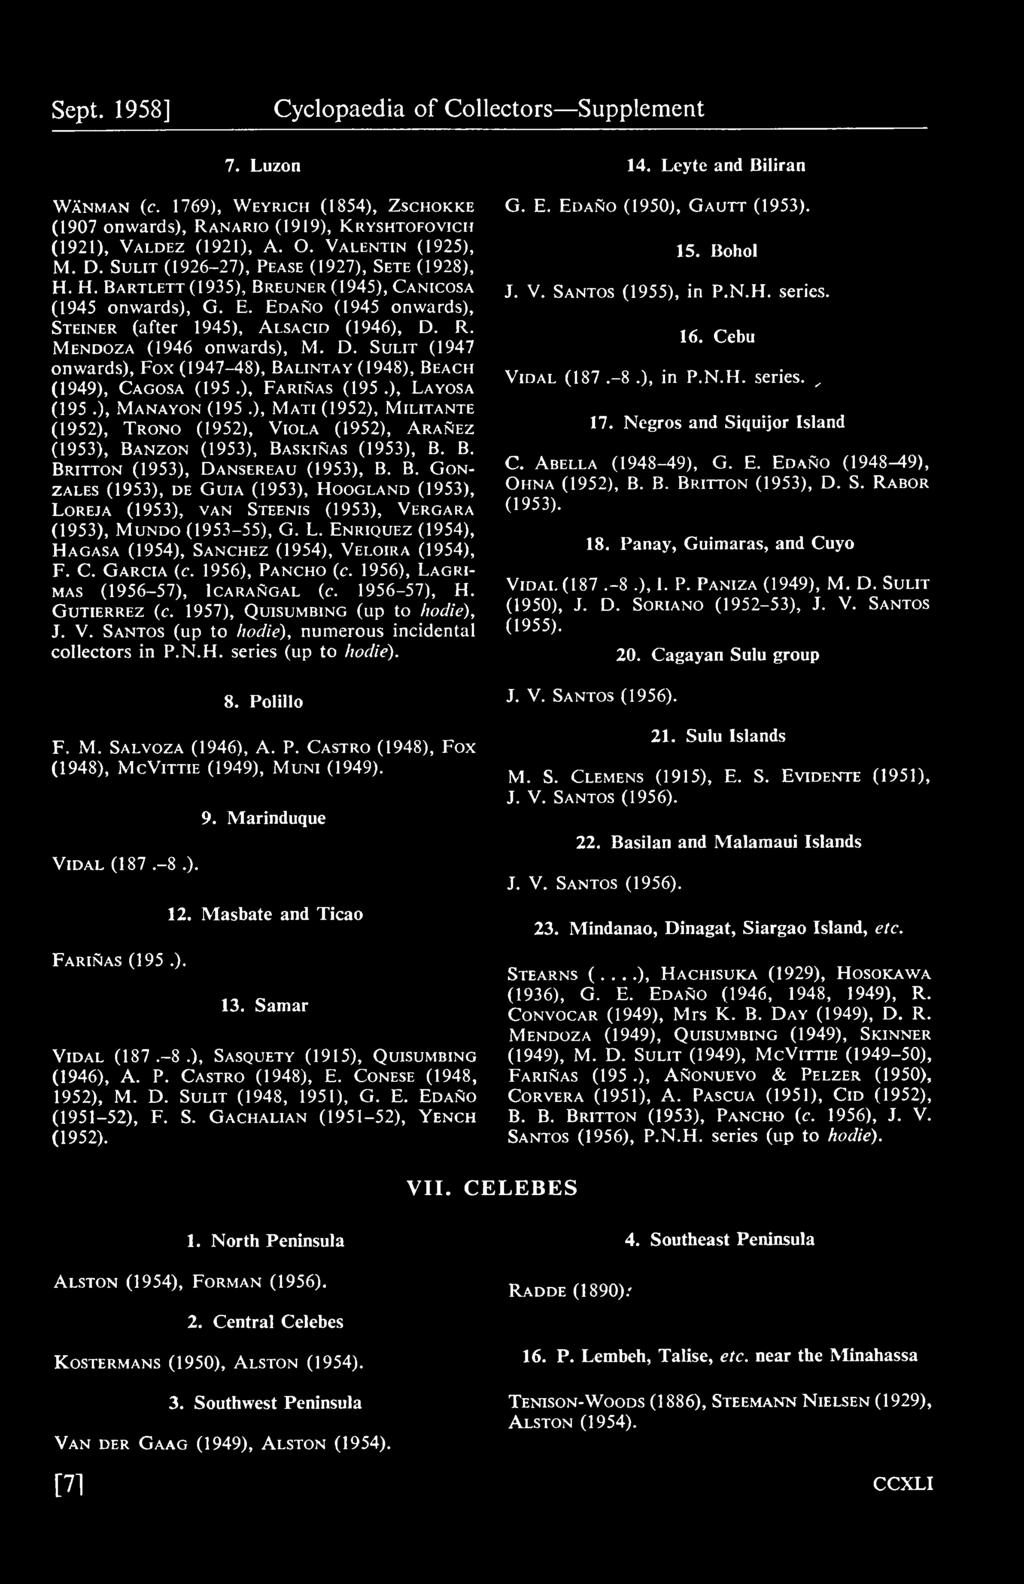 Mendoza (1946 onwards), M. D. Sulit (1947 onwards). Fox (1947-48), Balintay (1948), Beach (1949), Cagosa (195.), Farinas (195.), Layosa (195.), Manayon (195.